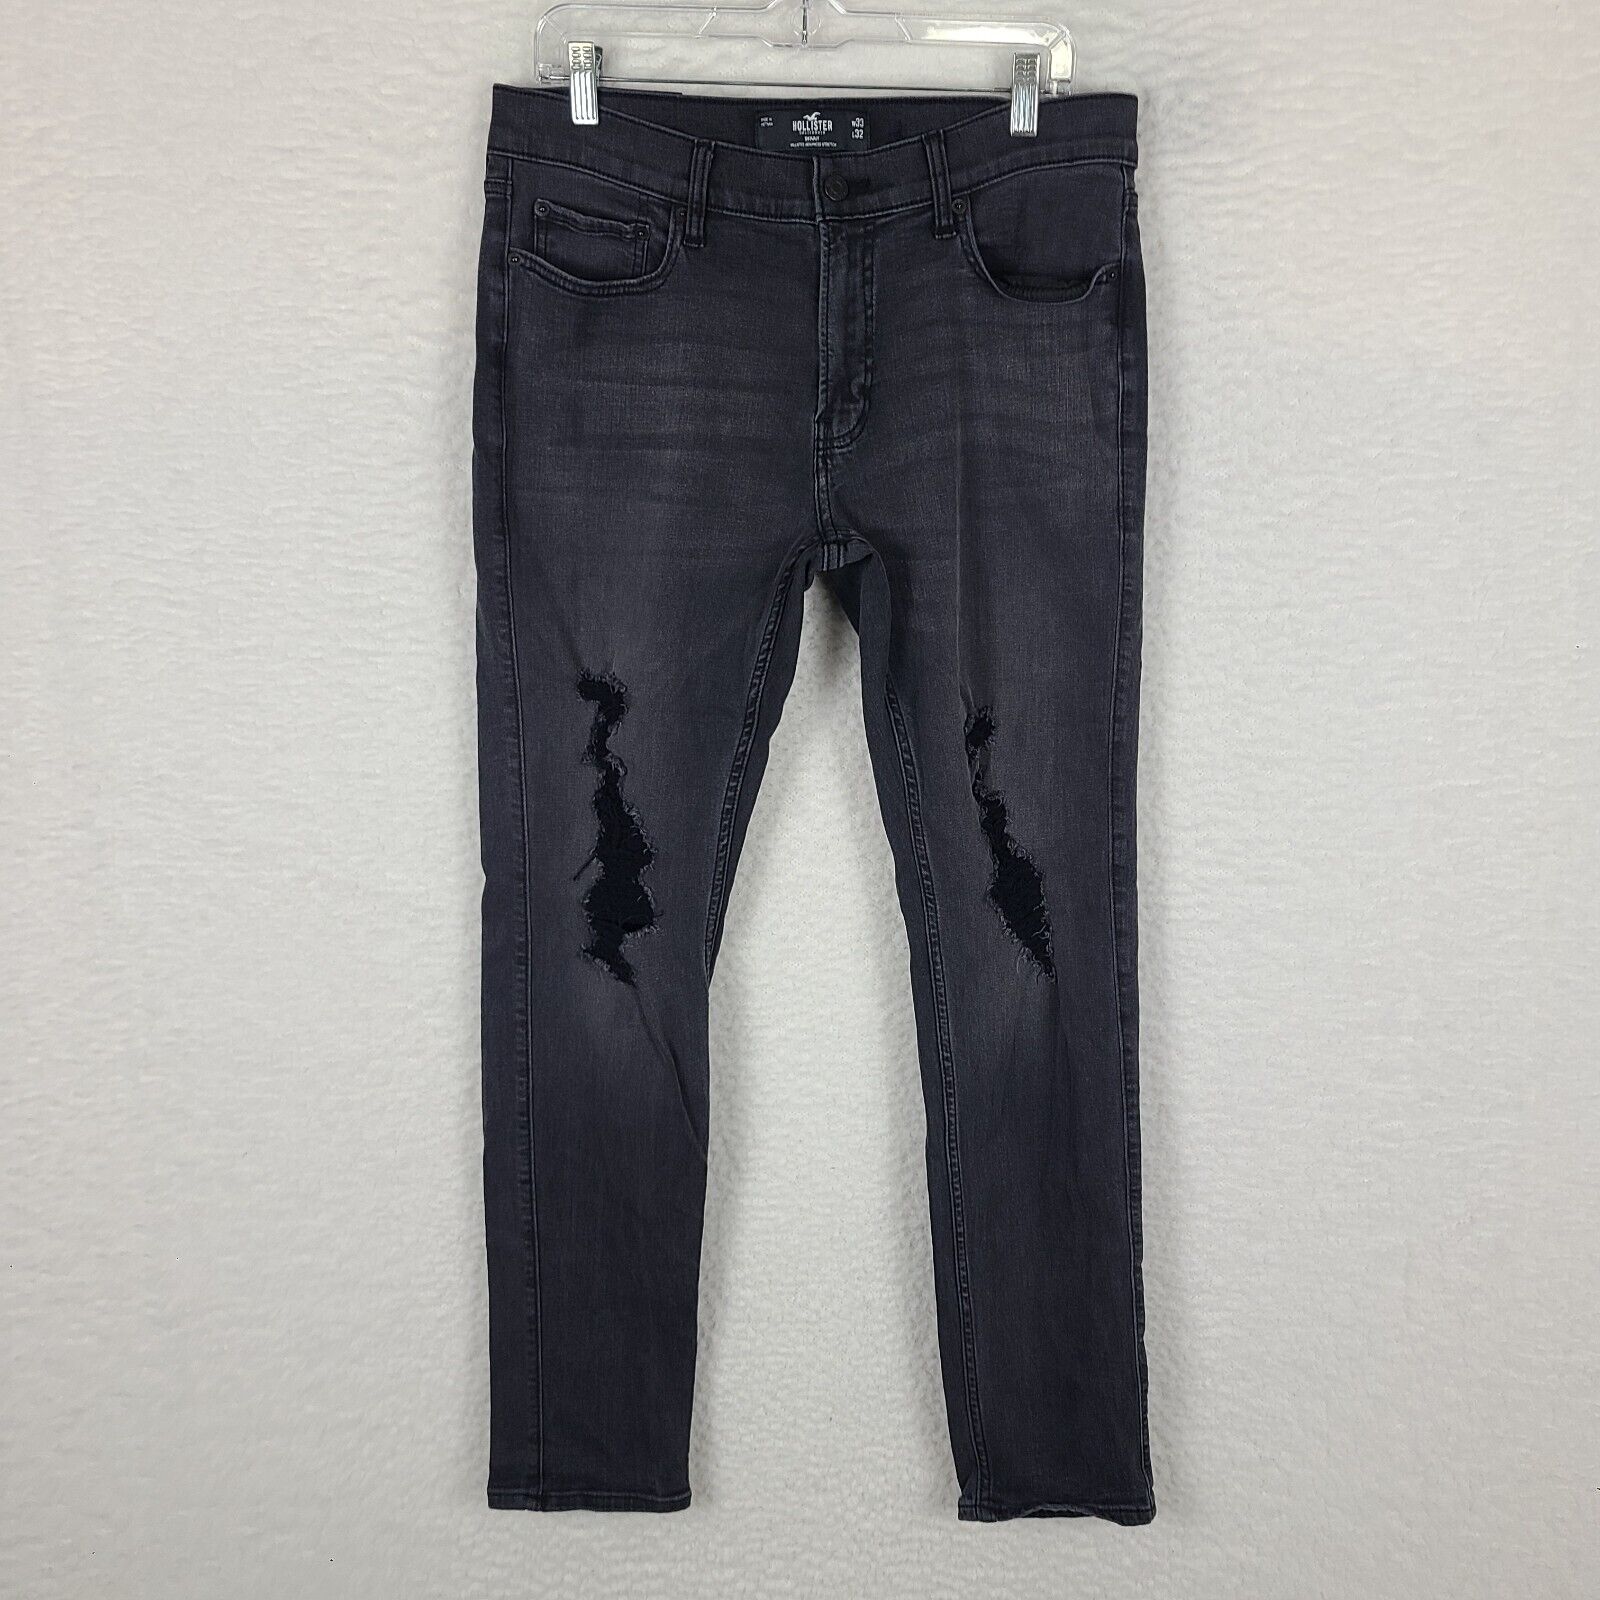 Hollister Jeans Mens 33 x 32 Skinny Advanced Stretch Distress Dark Gray Wash